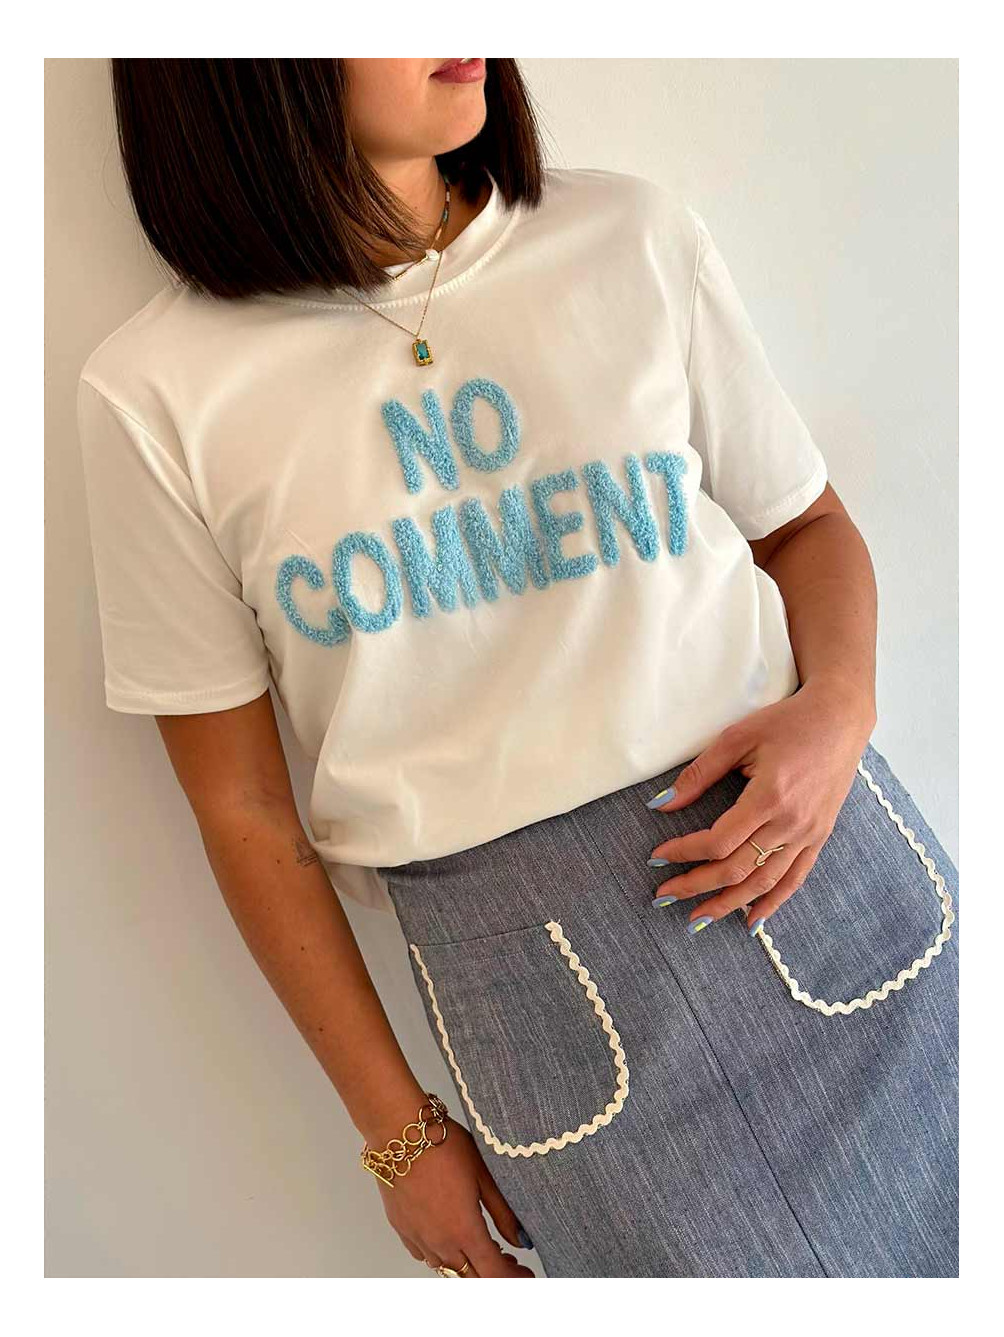 Camiseta No Comment, Camiseta de Mujer, Camiseta de Algodón, Mariquita Trasquilá